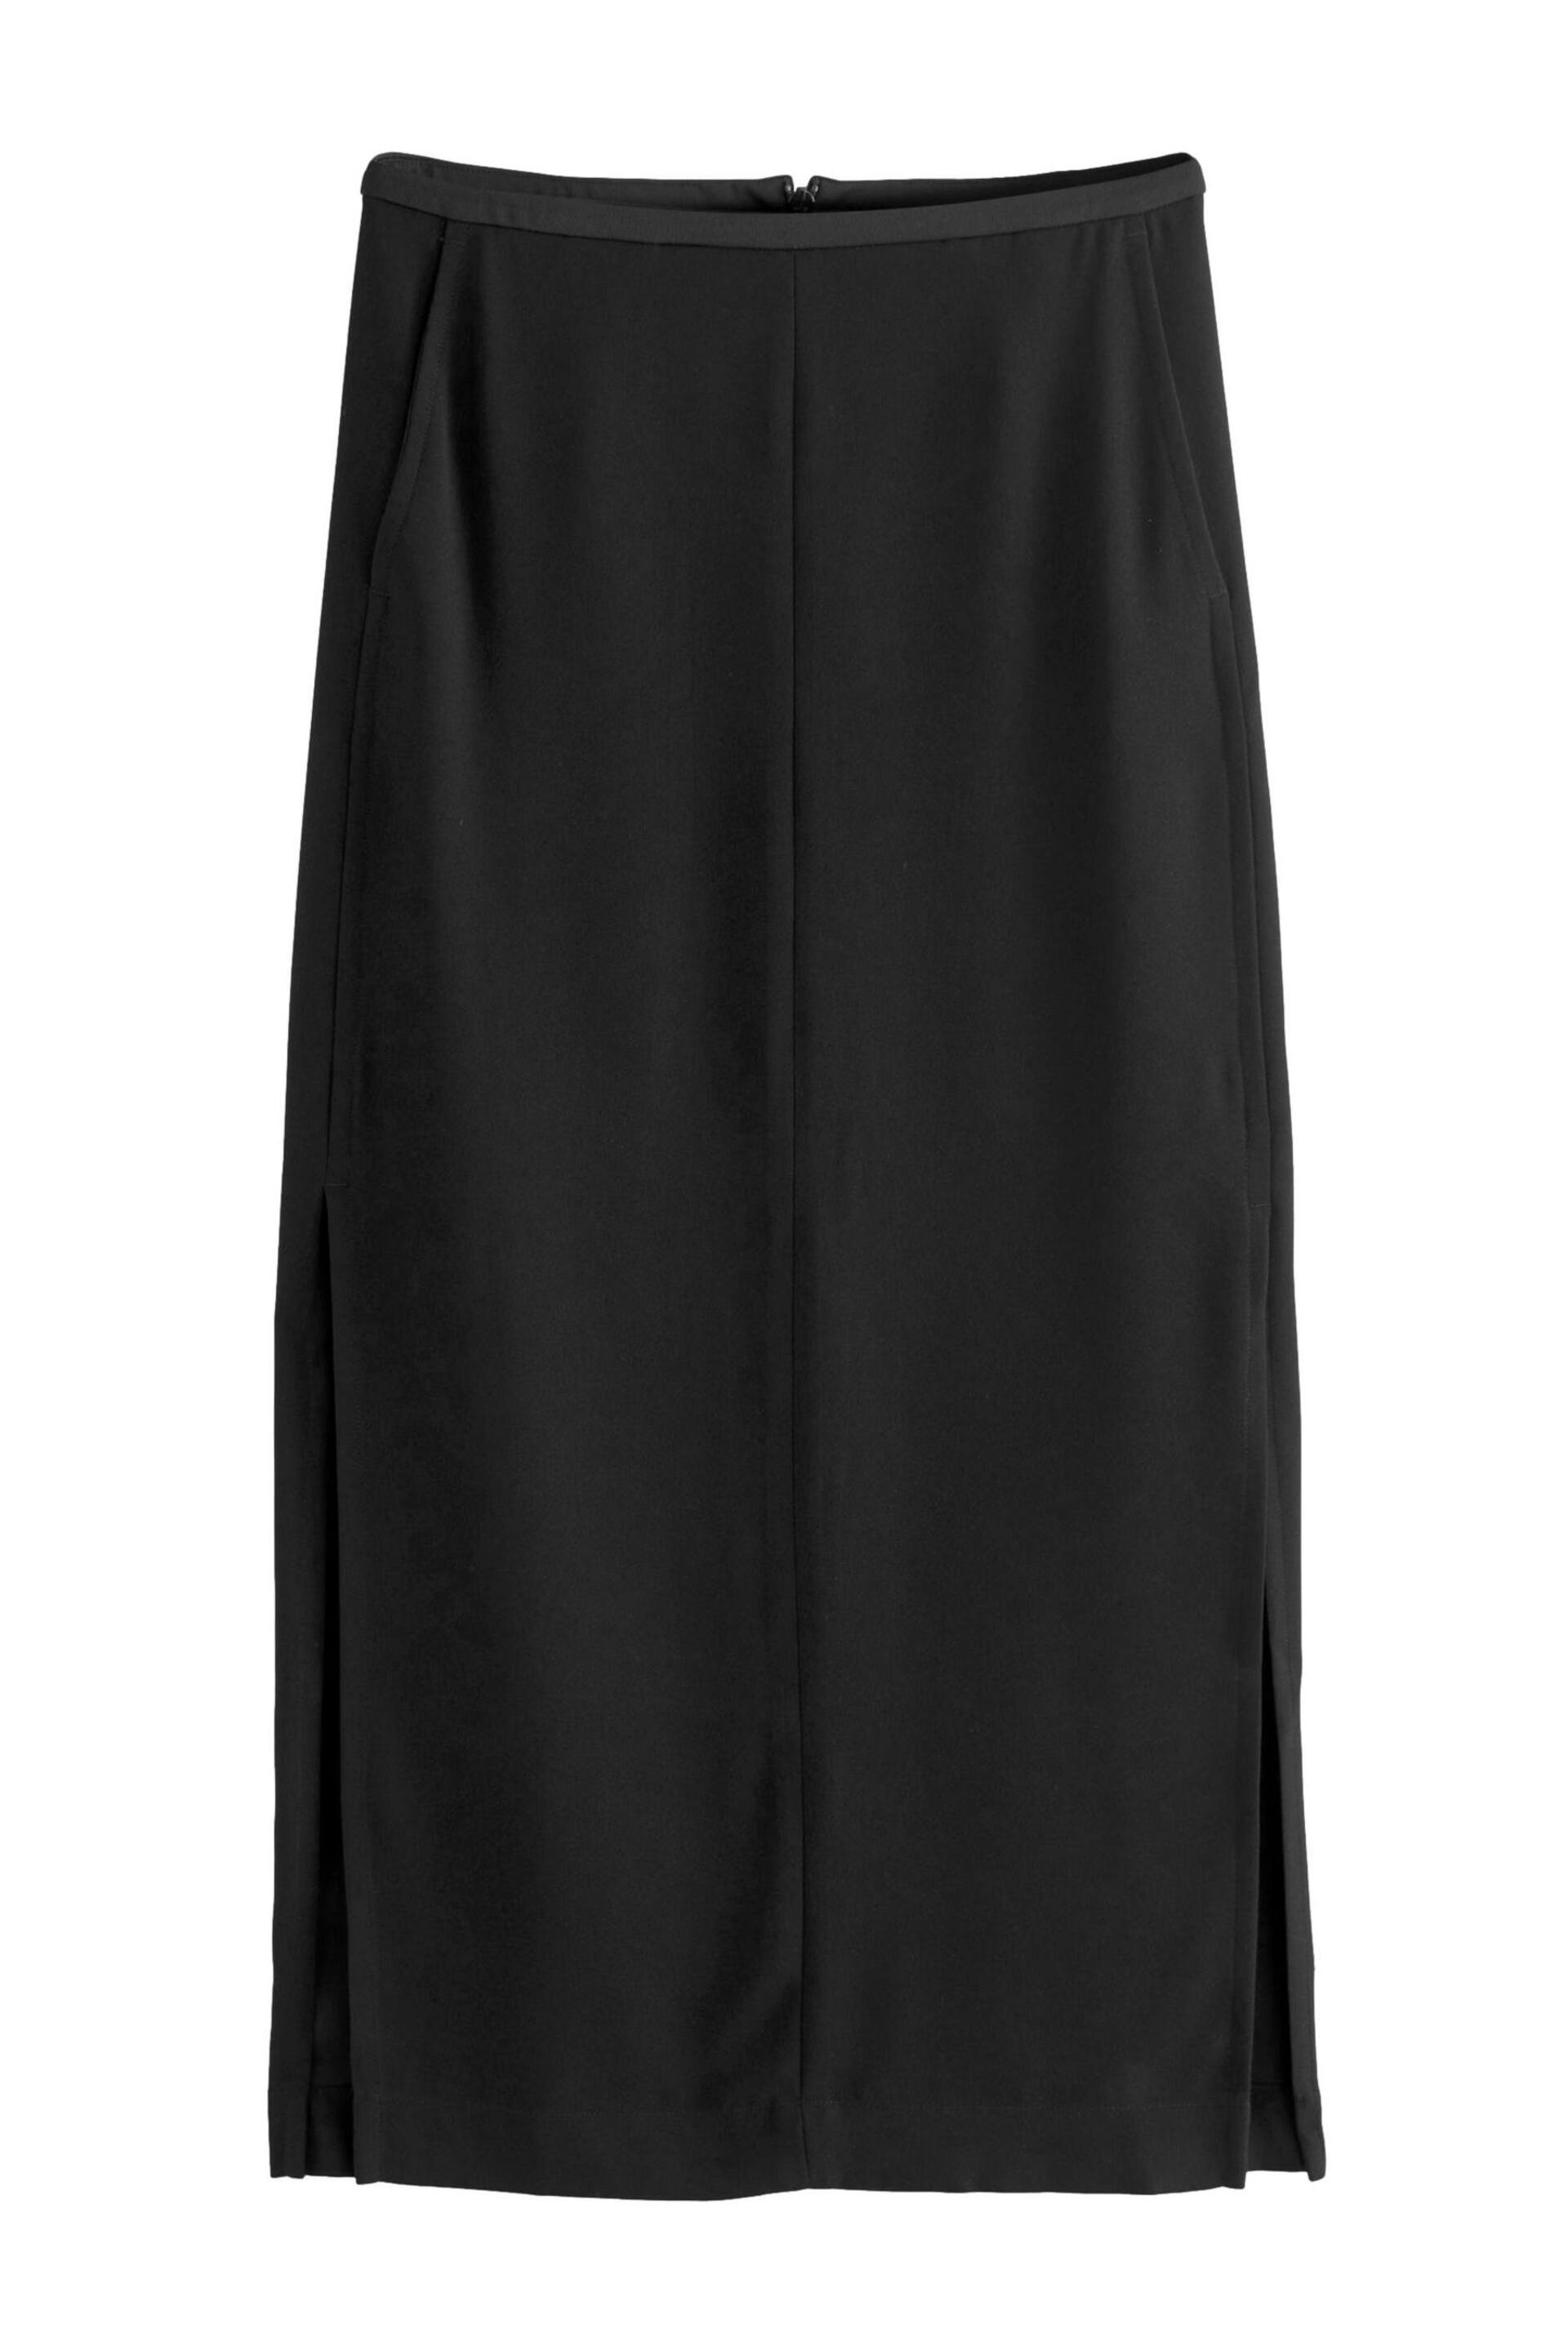 Black Tailored Crepe Column Skirt - Image 5 of 6